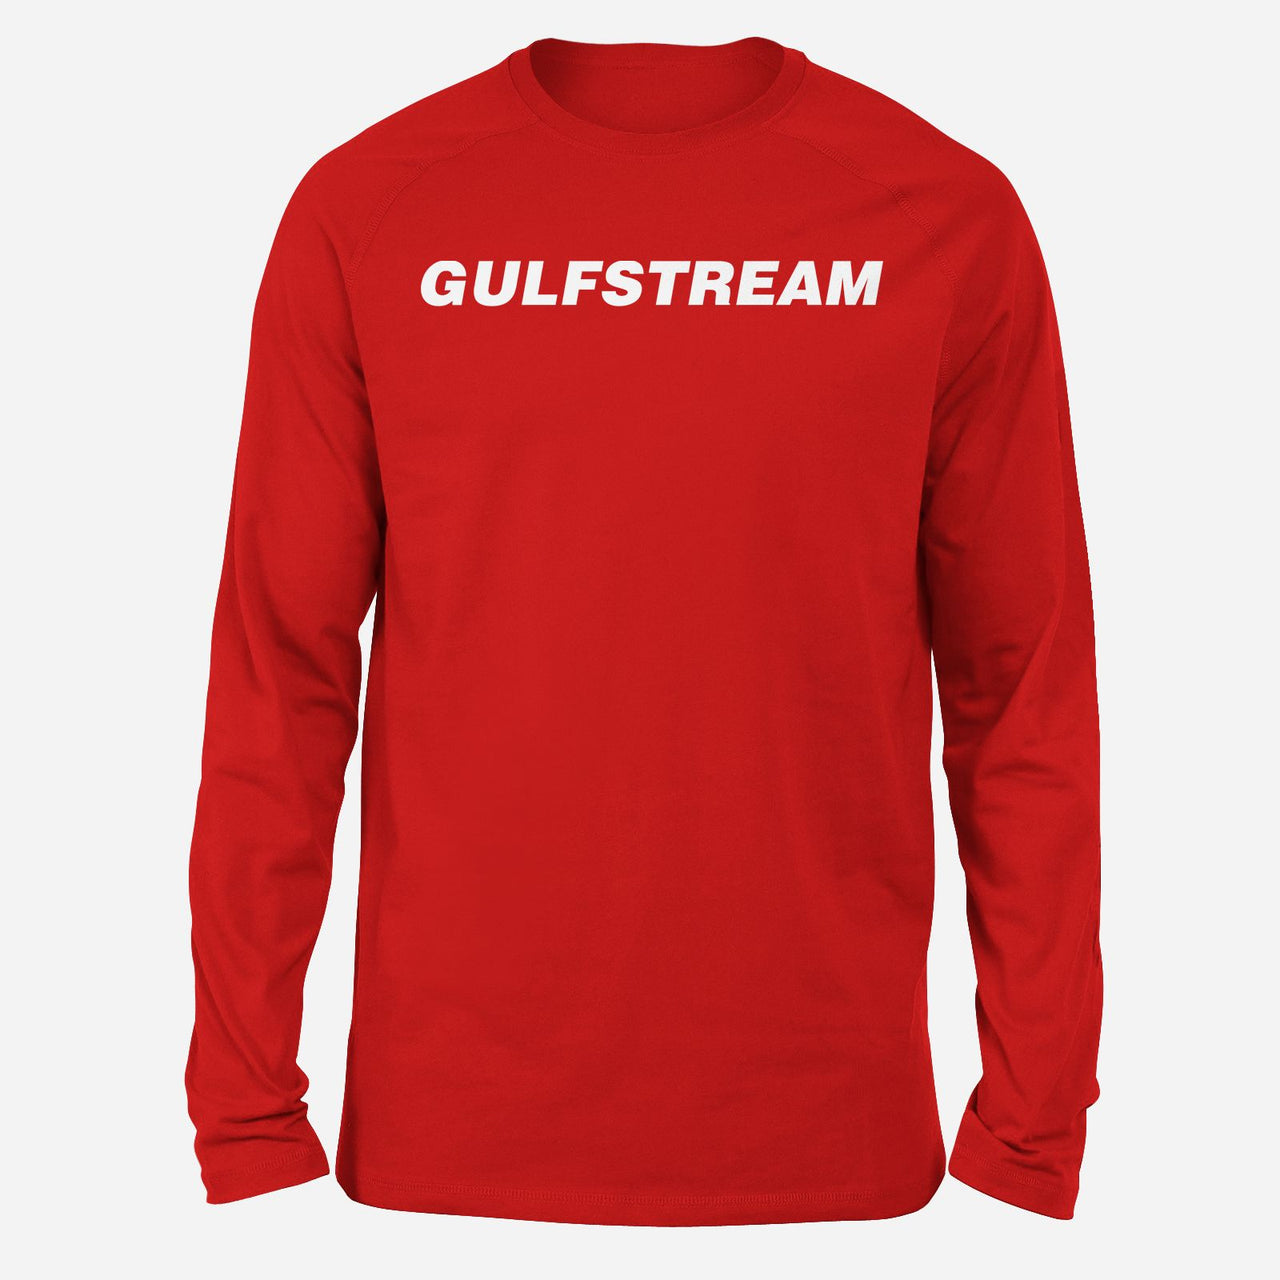 Gulfstream & Text Designed Long-Sleeve T-Shirts